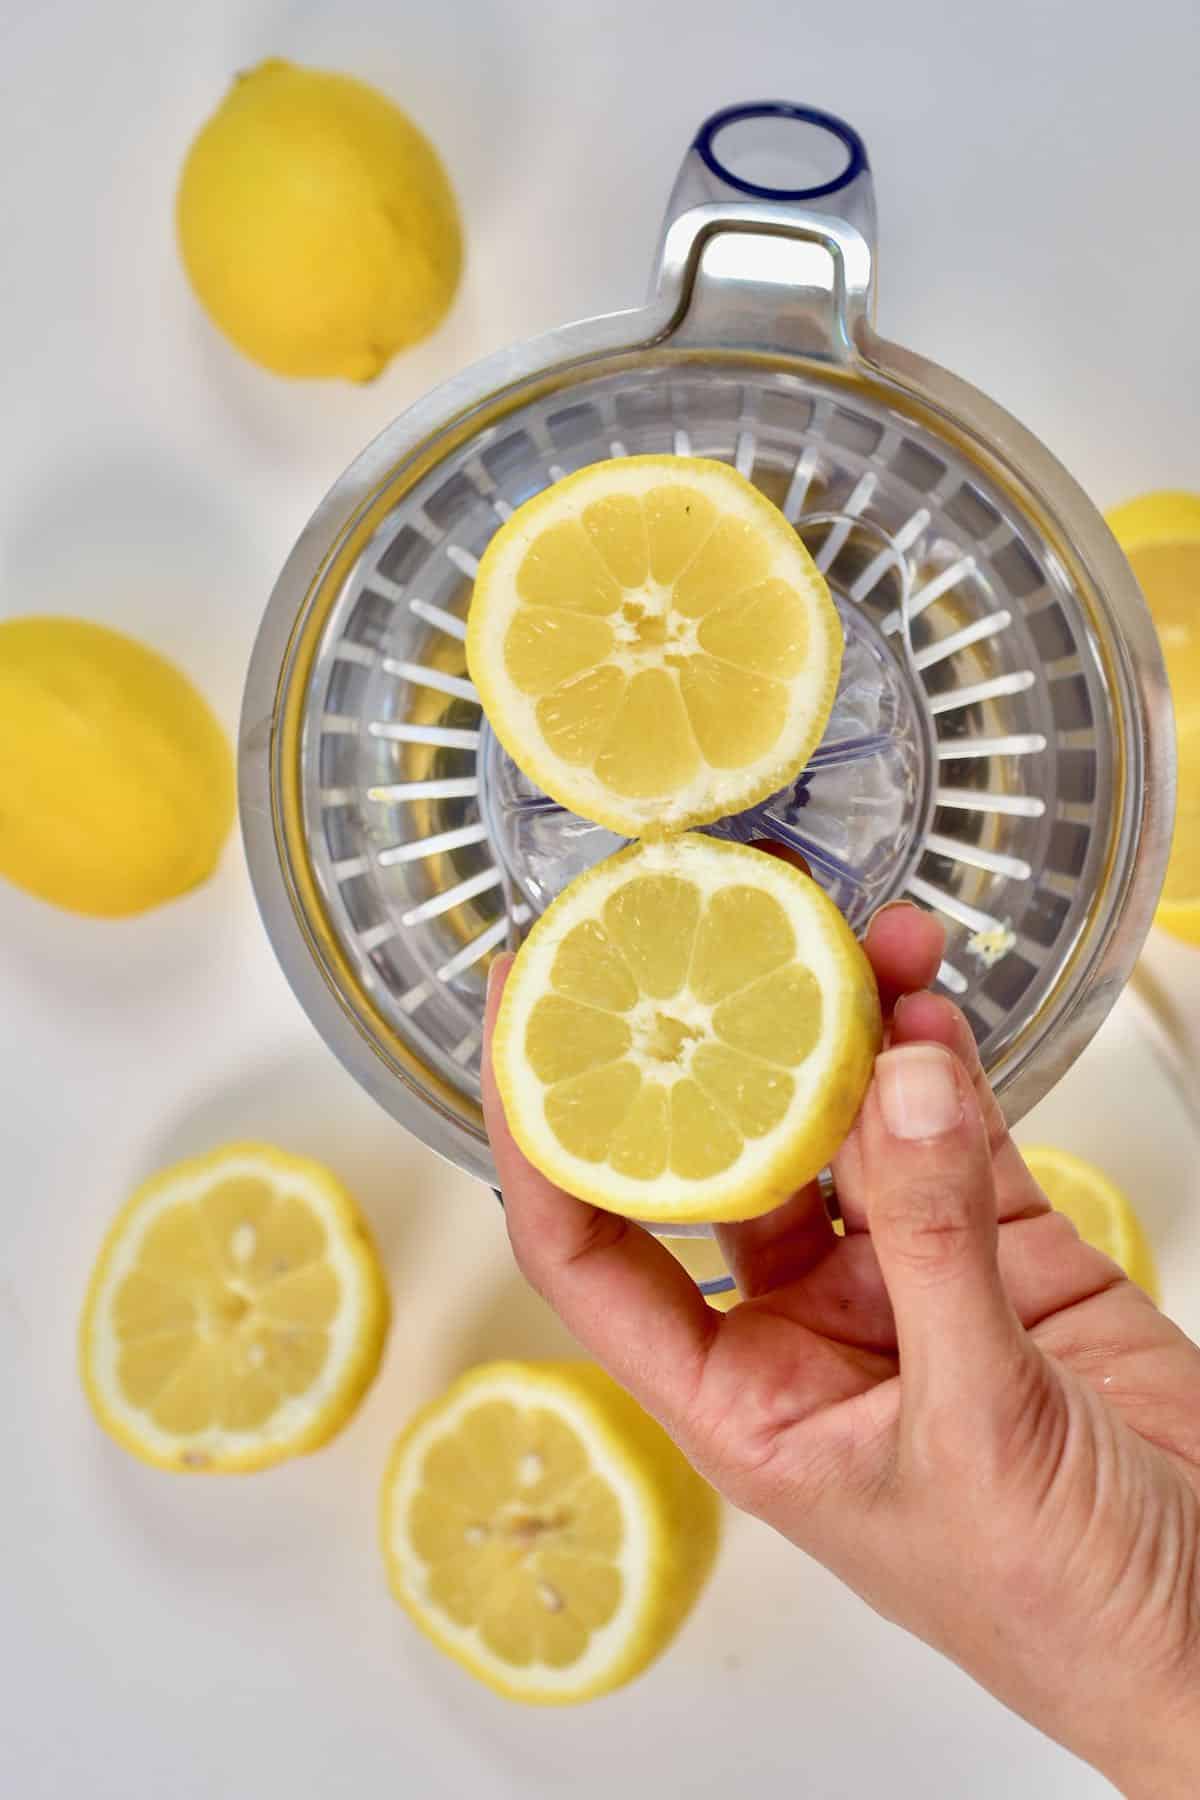 Juicing lemons